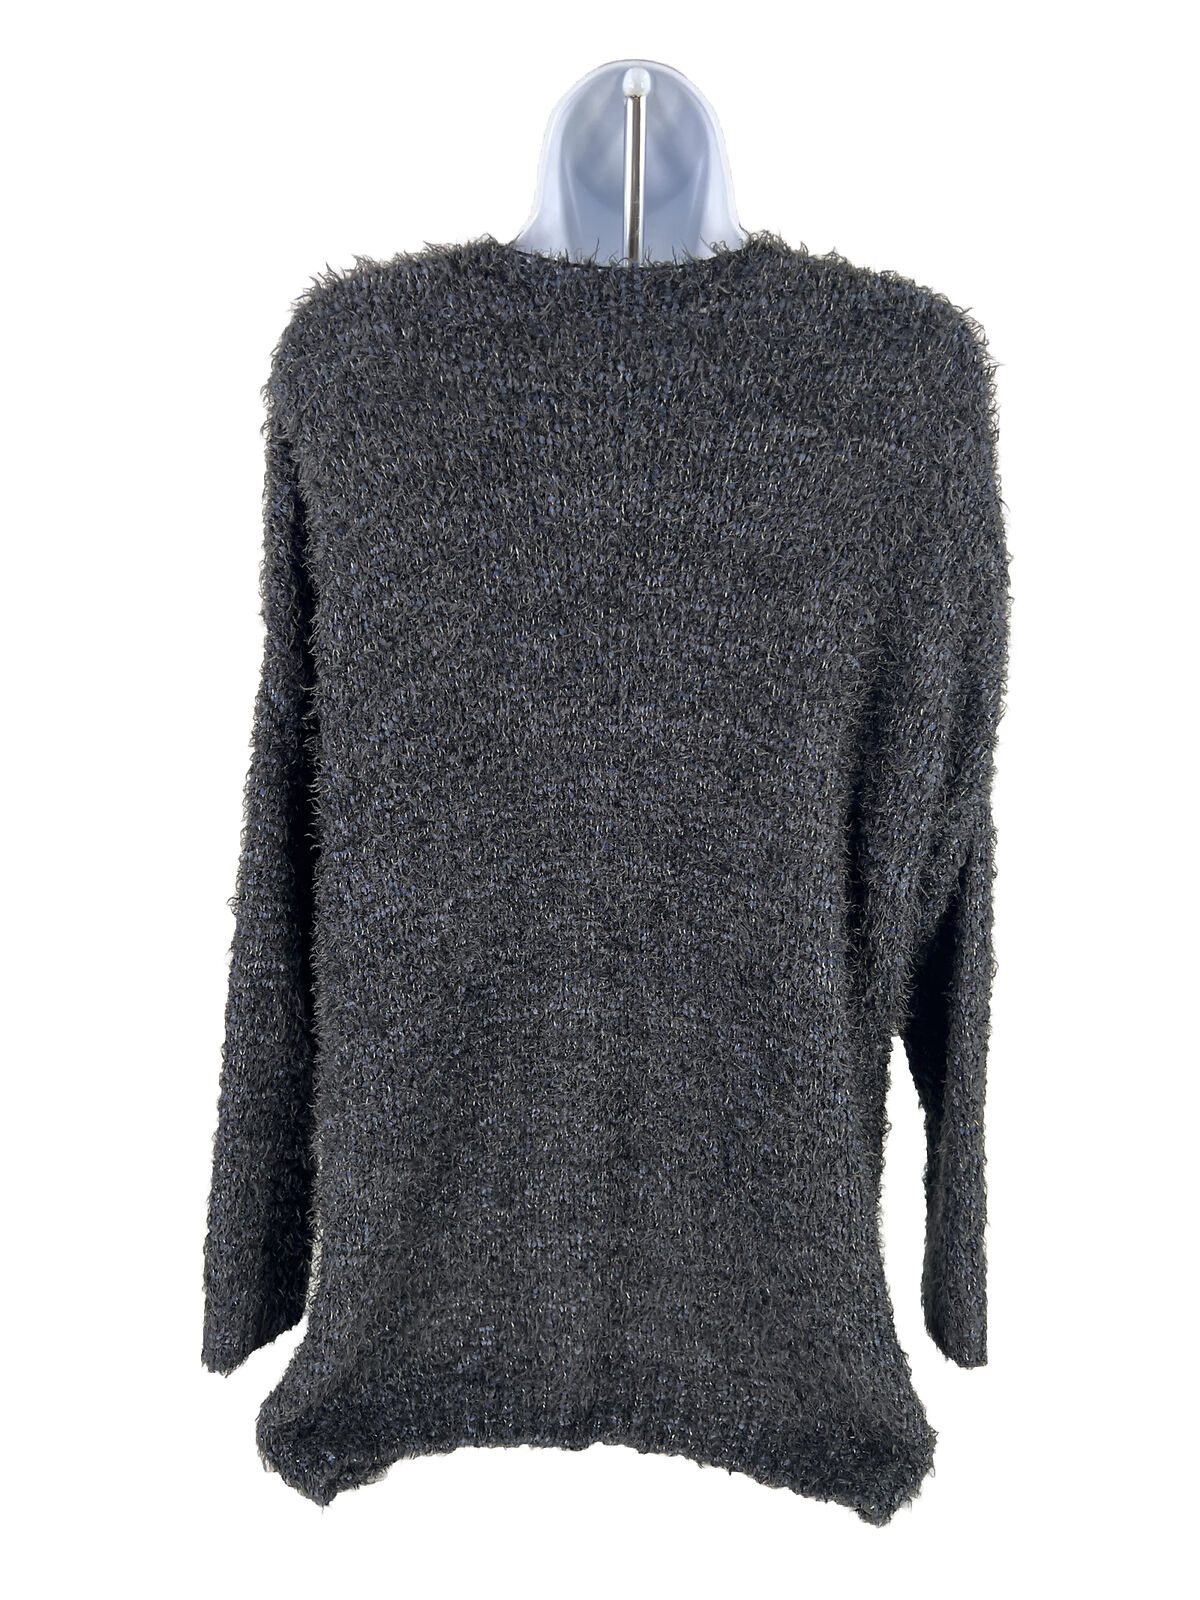 Max Studio Women's Dark Blue Knit Fuzzy Cardigan Sweater - M